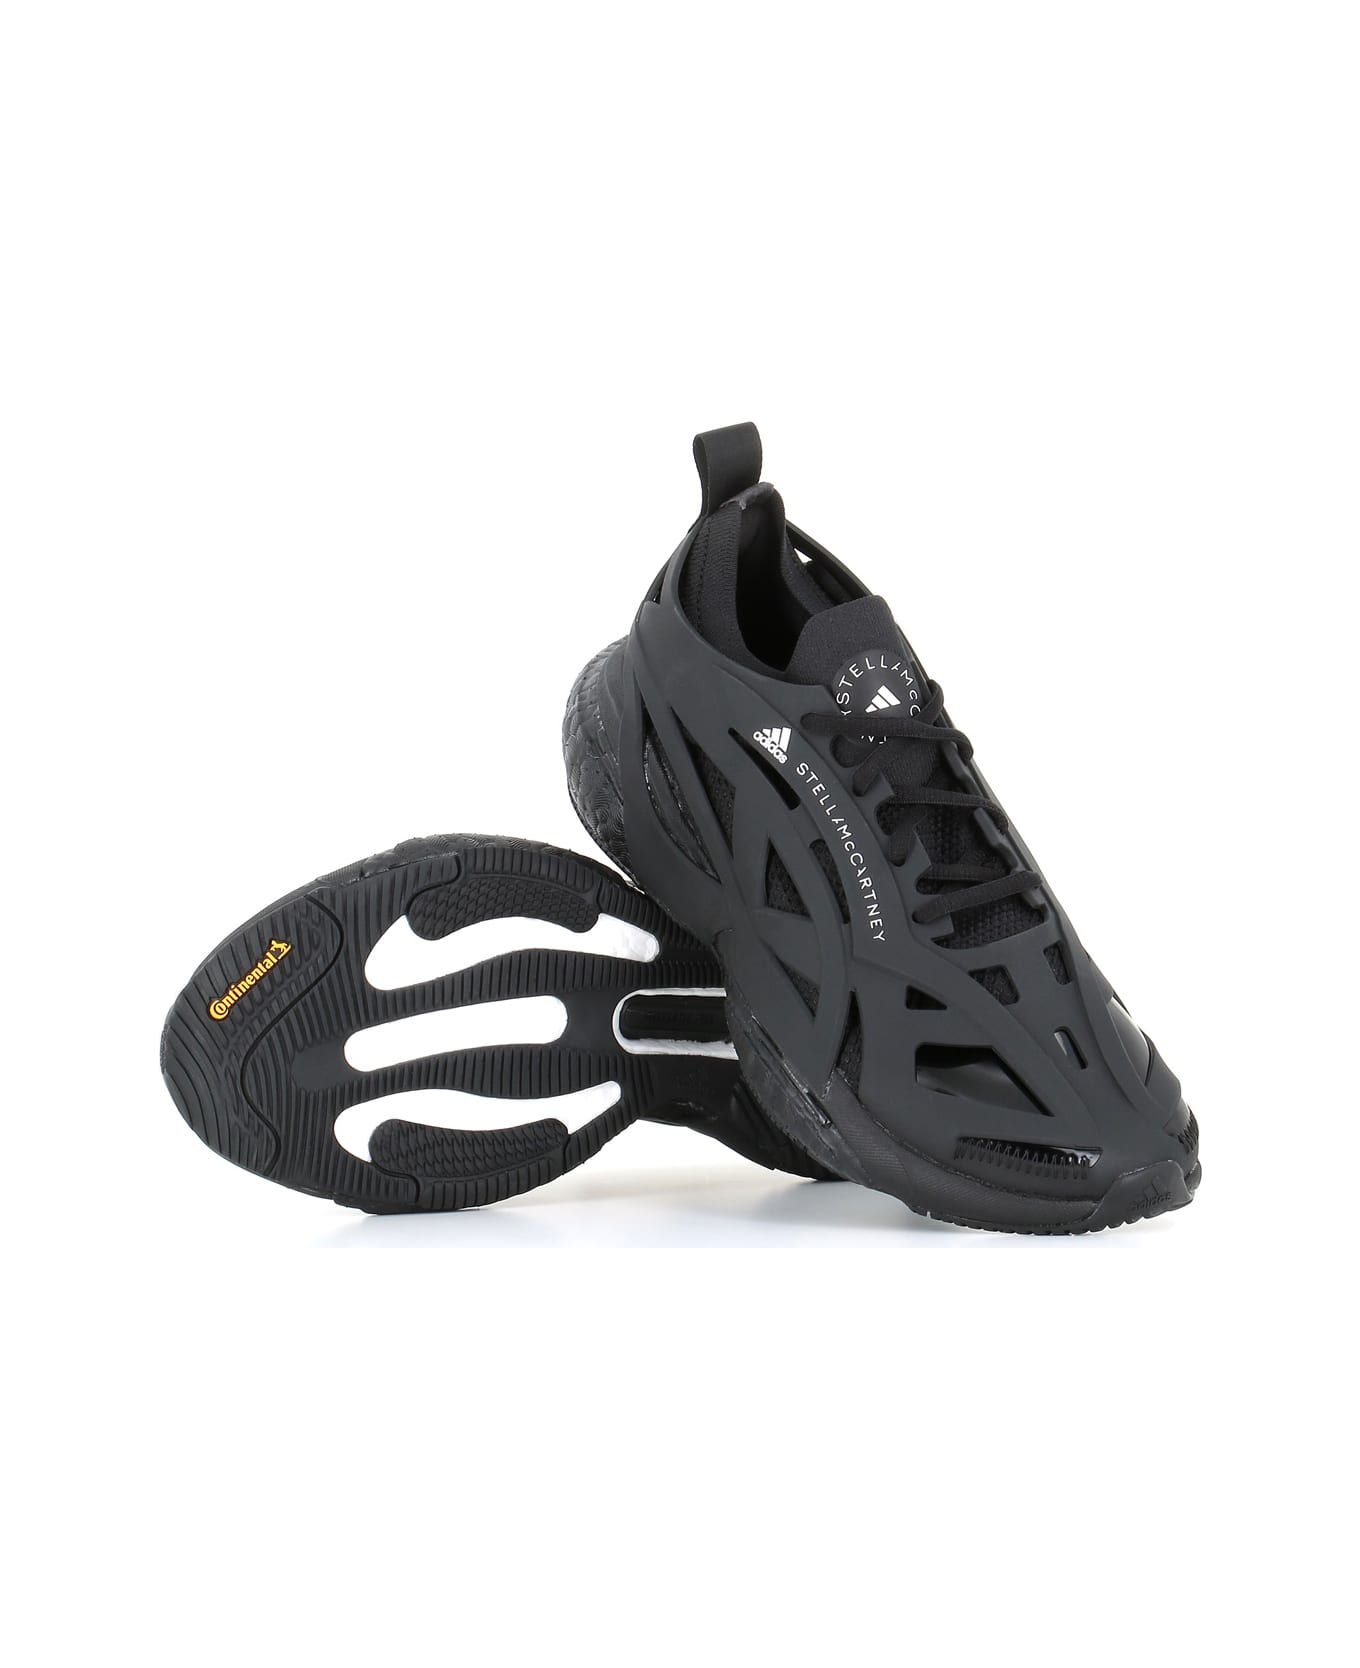 Adidas by Stella McCartney Solarglide Running Sneakers - Black